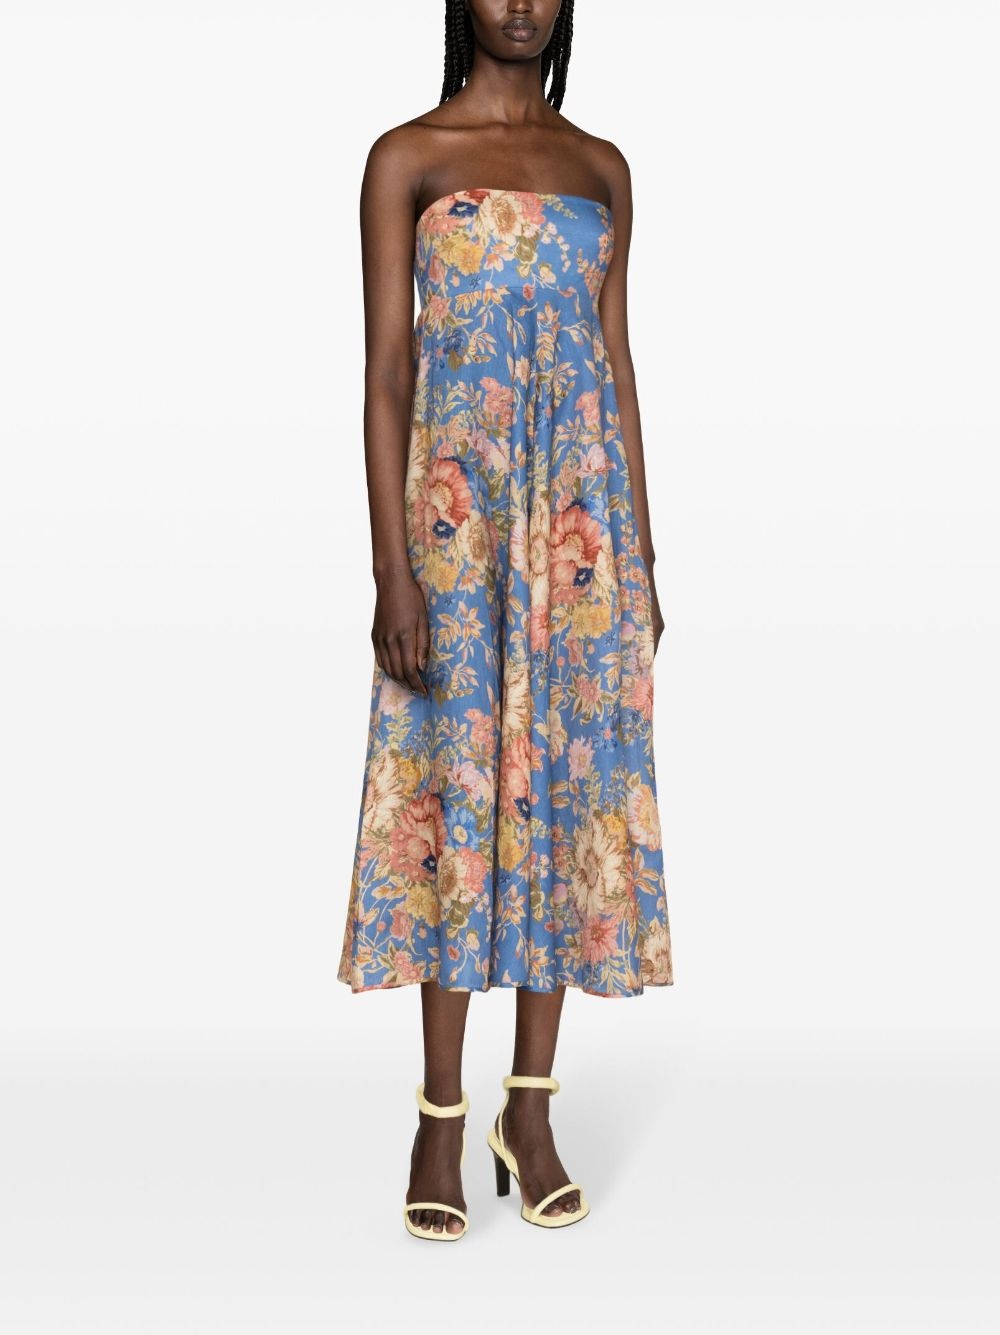 August floral-print strapless dress - 3